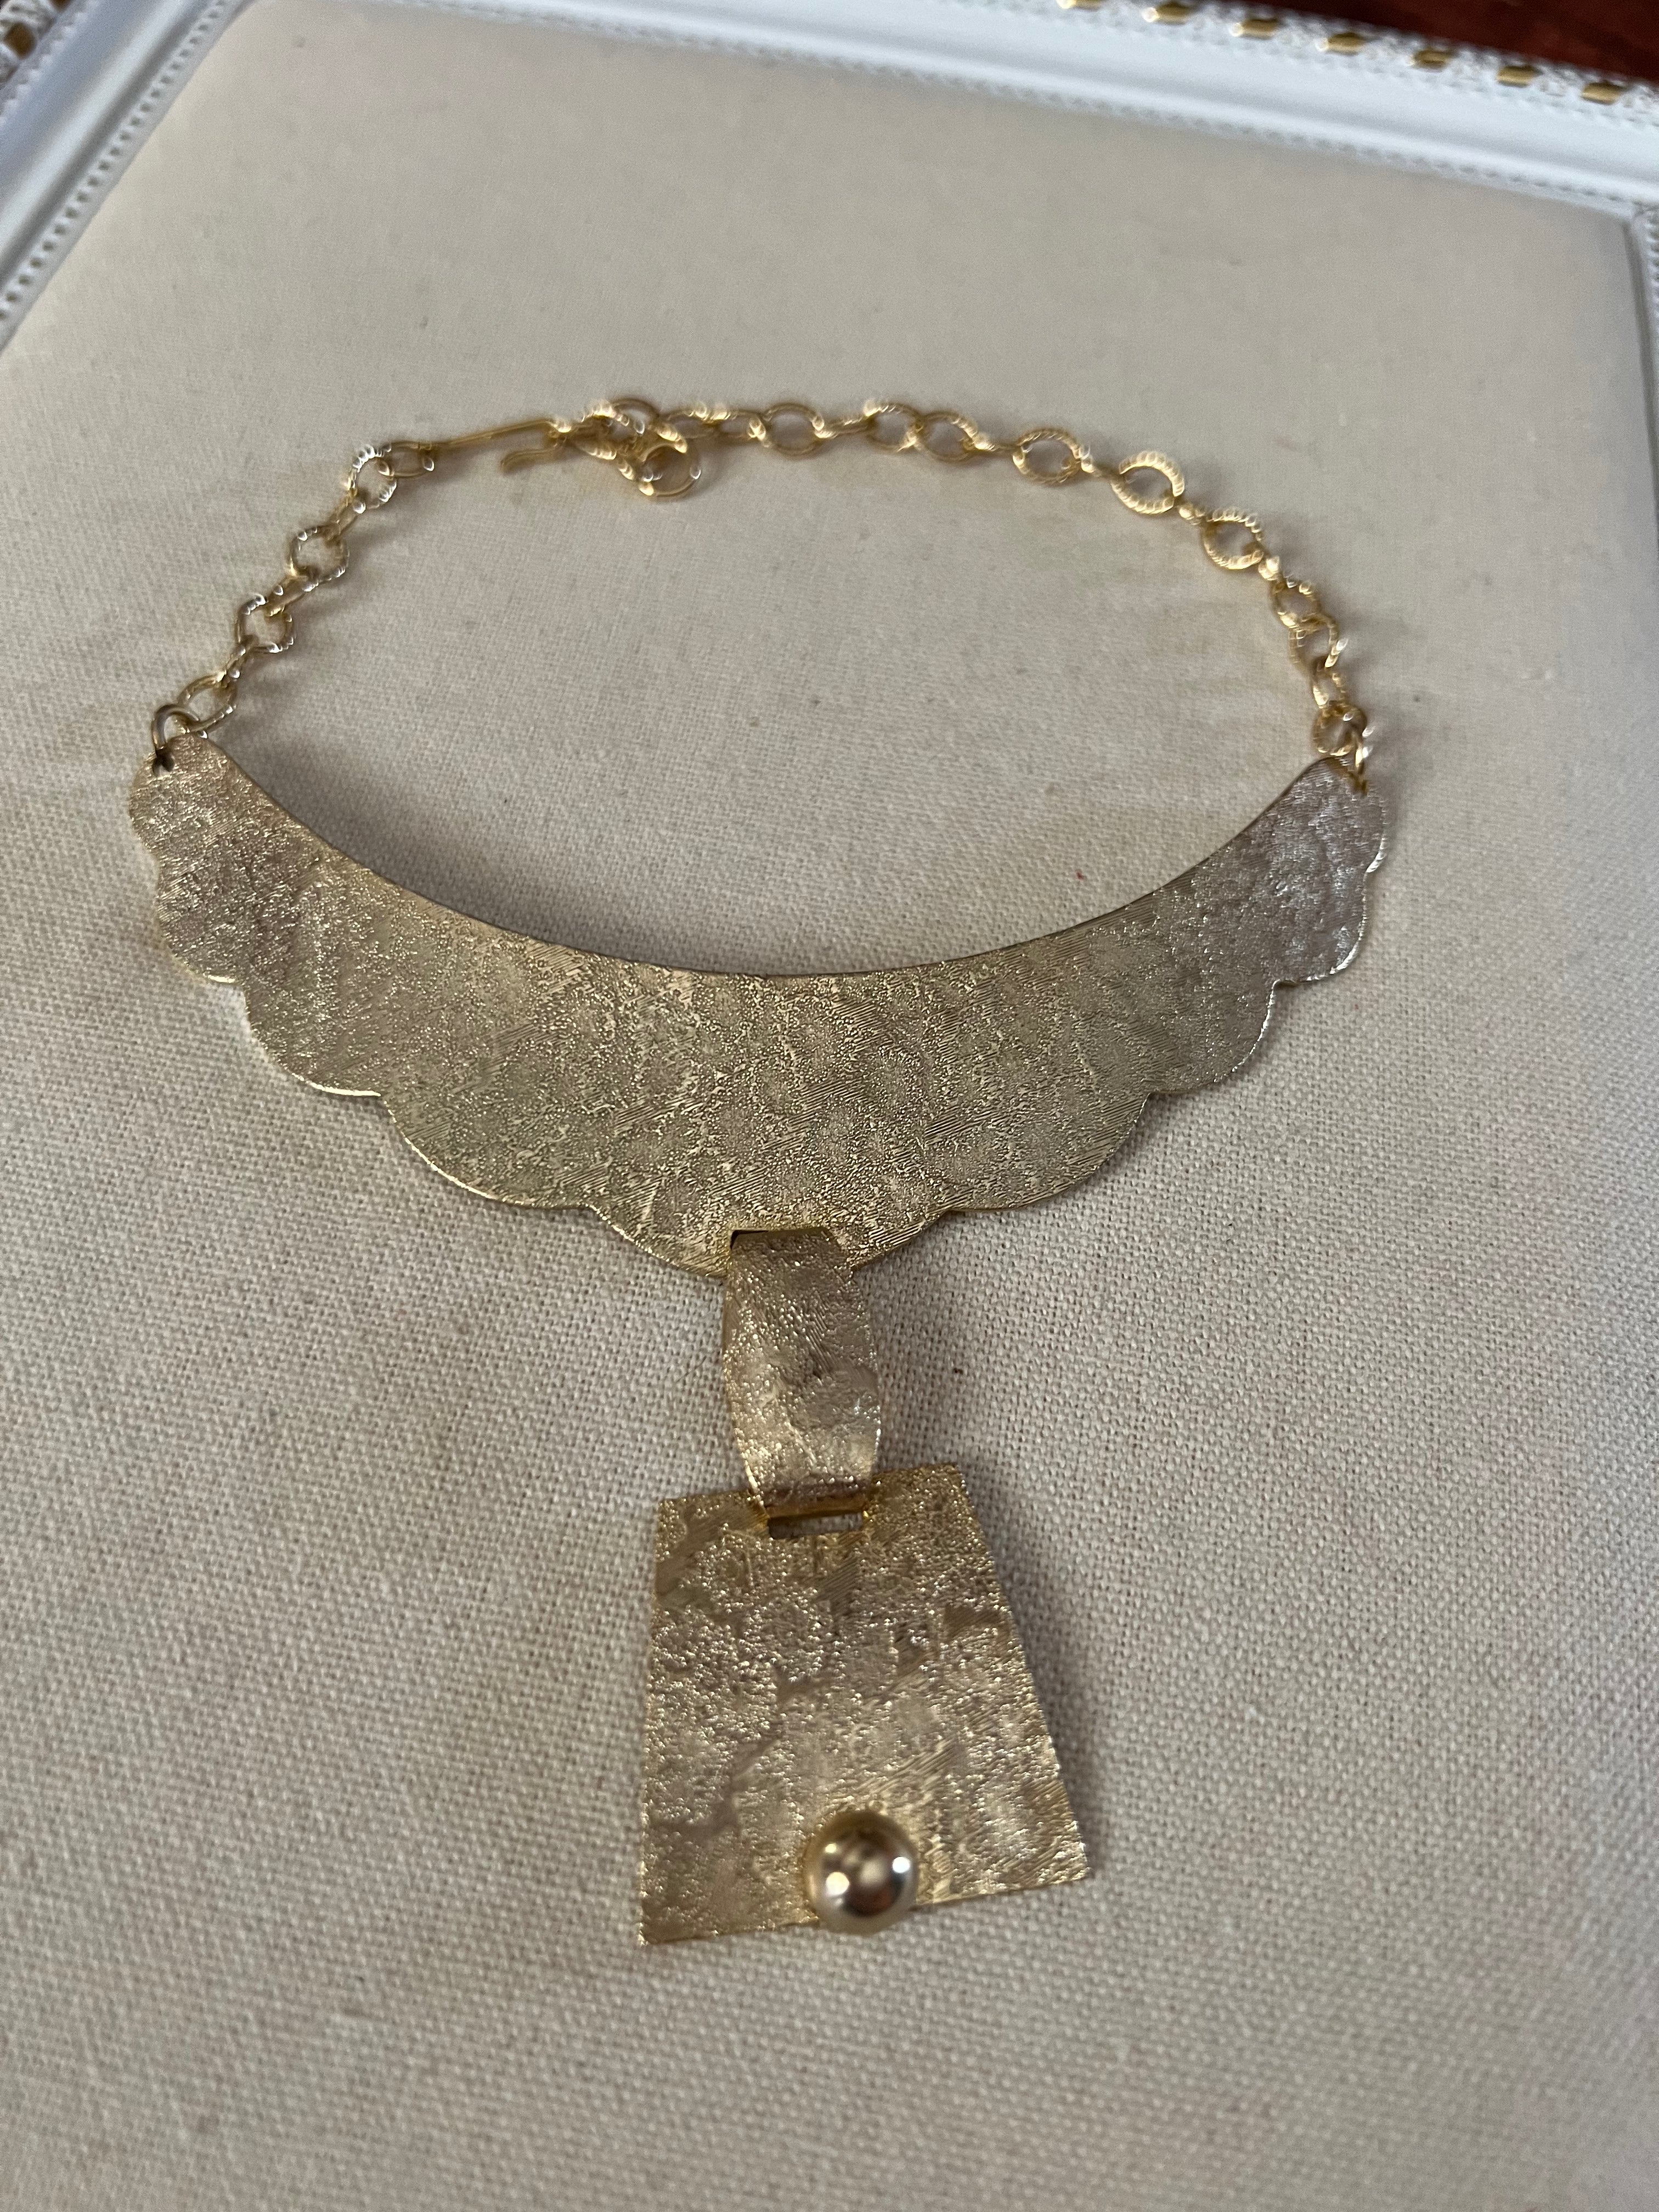 Vintage Gold Choker Necklace